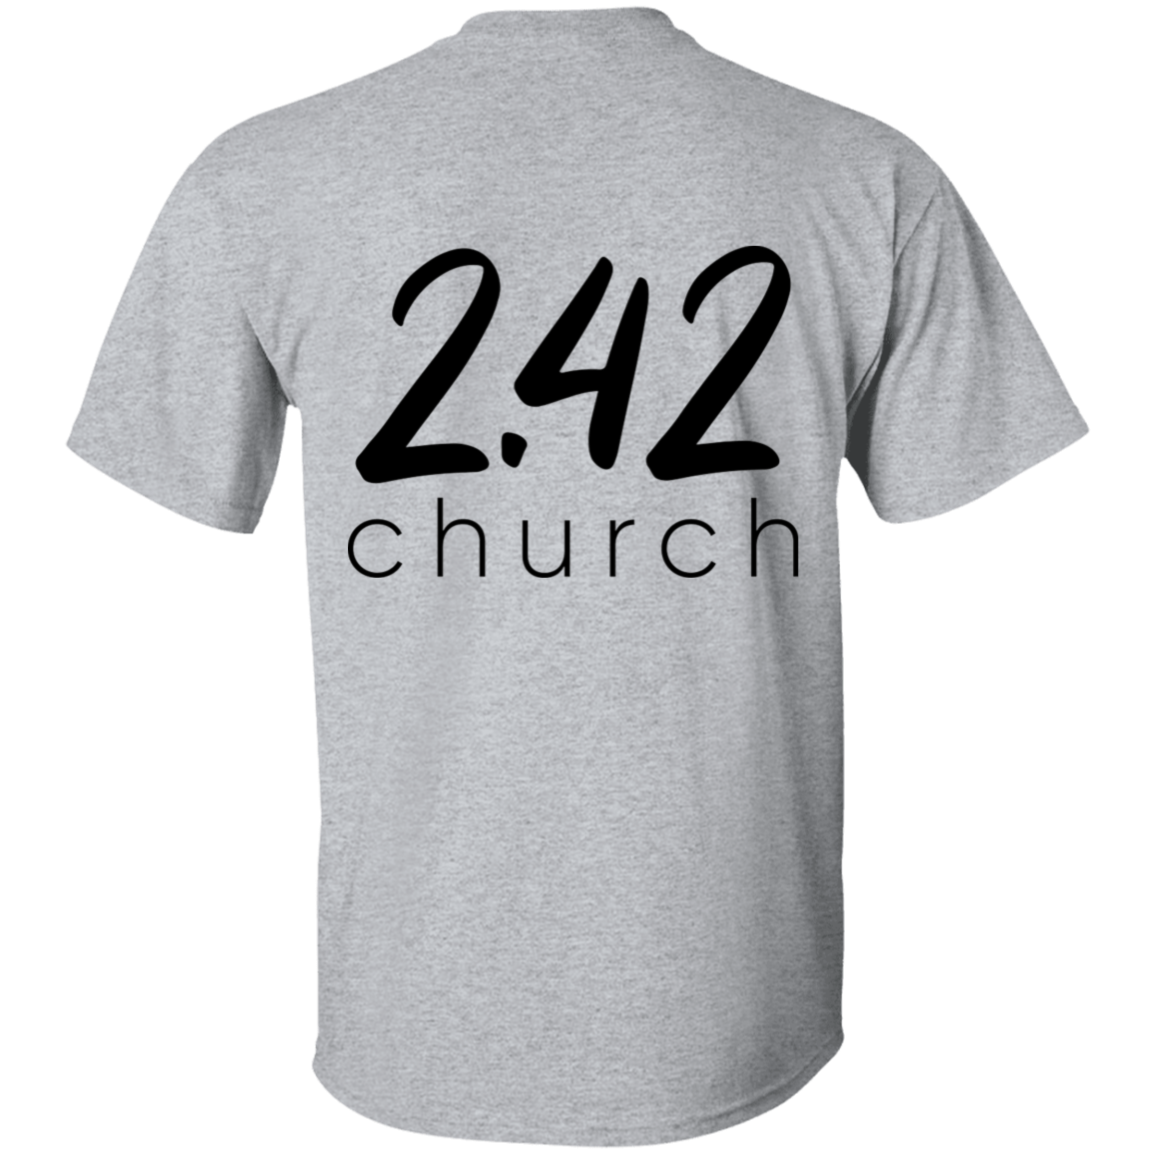 2.42 Church Shirts - Black Logo